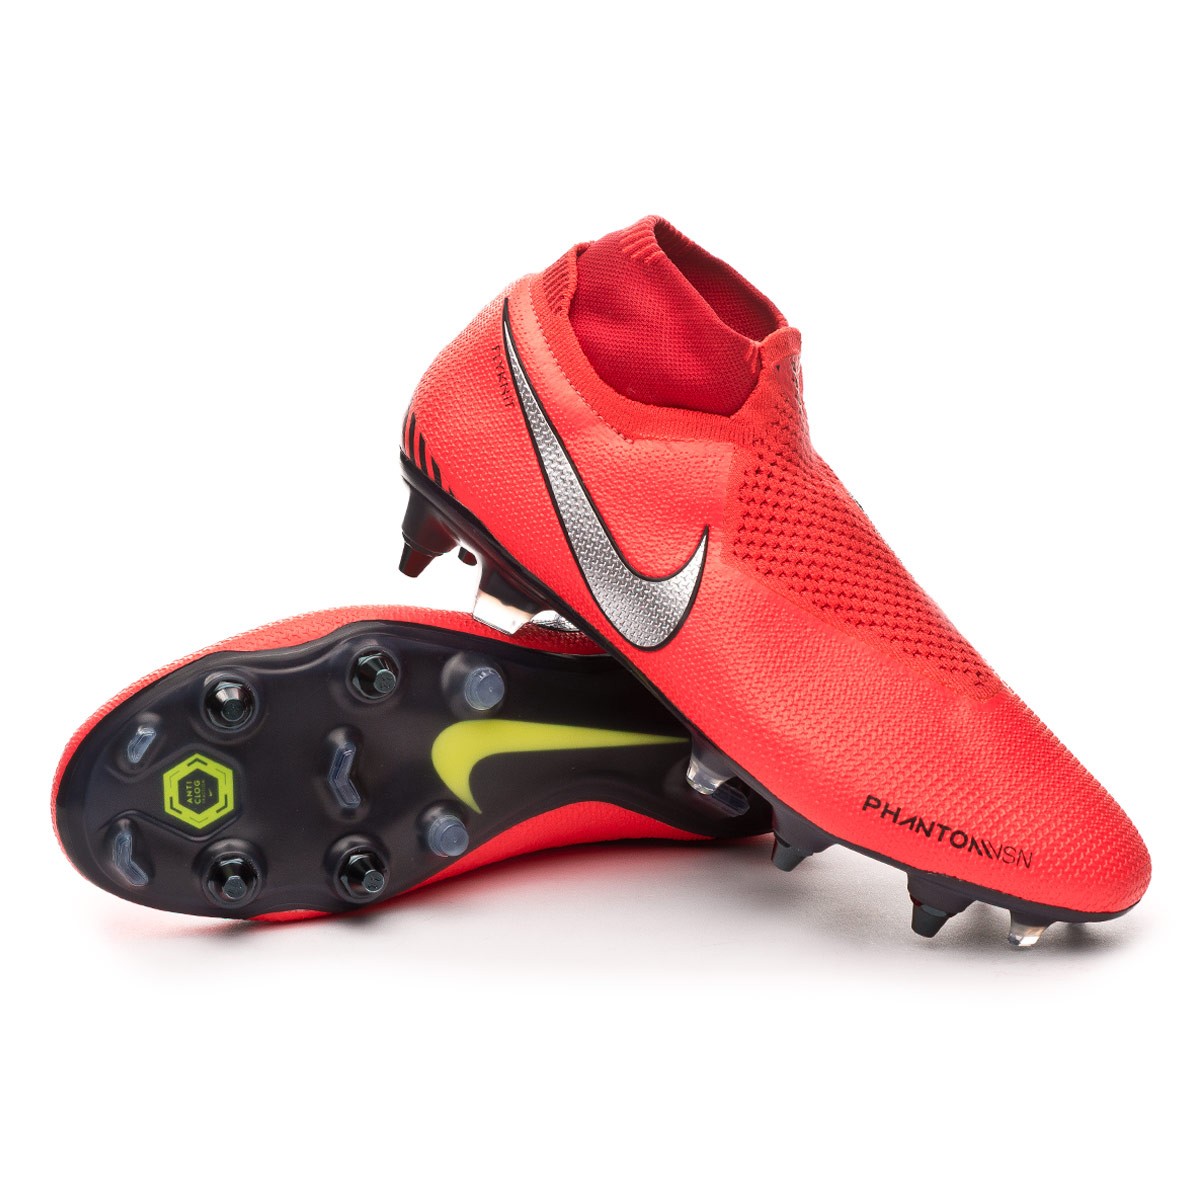 Football Boots Nike Phantom Vision Elite DF SG-Pro ACC Bright  crimson-Metallic silver - Football store Fútbol Emotion